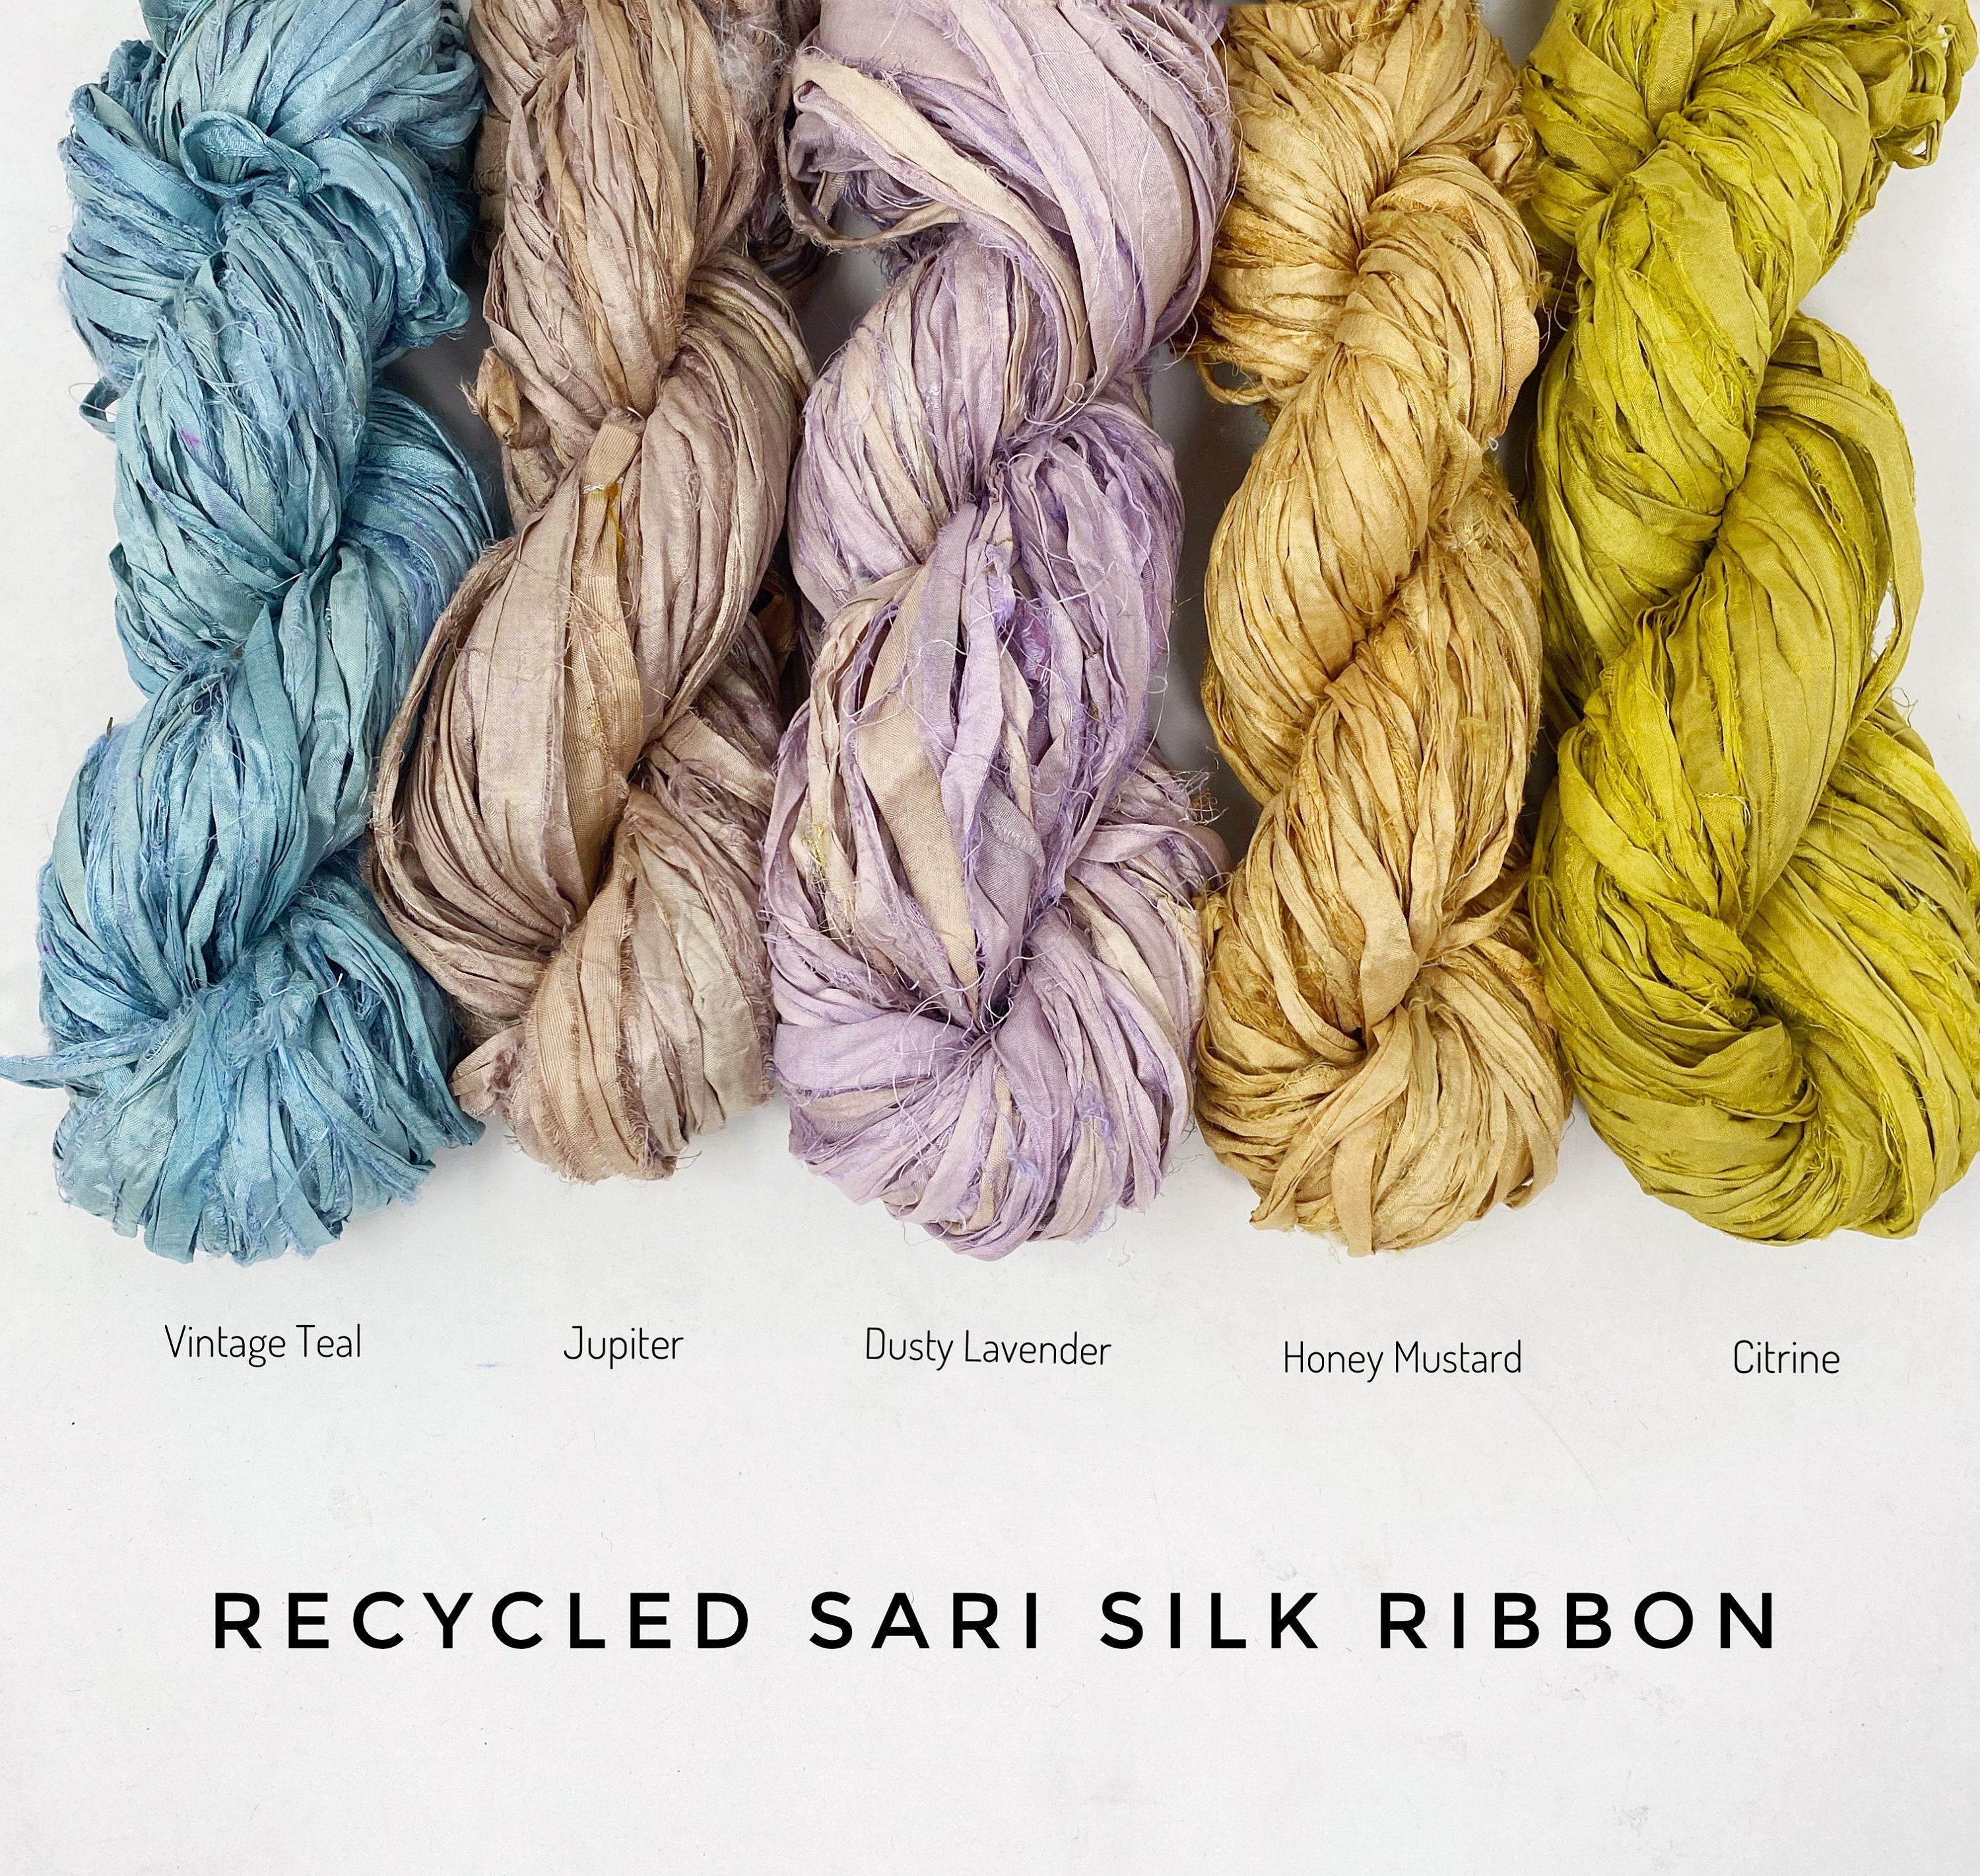 100g Recycled Sari Silk Yarn Skein Unstitched 50 Yards For Fiber Arts  Crafts